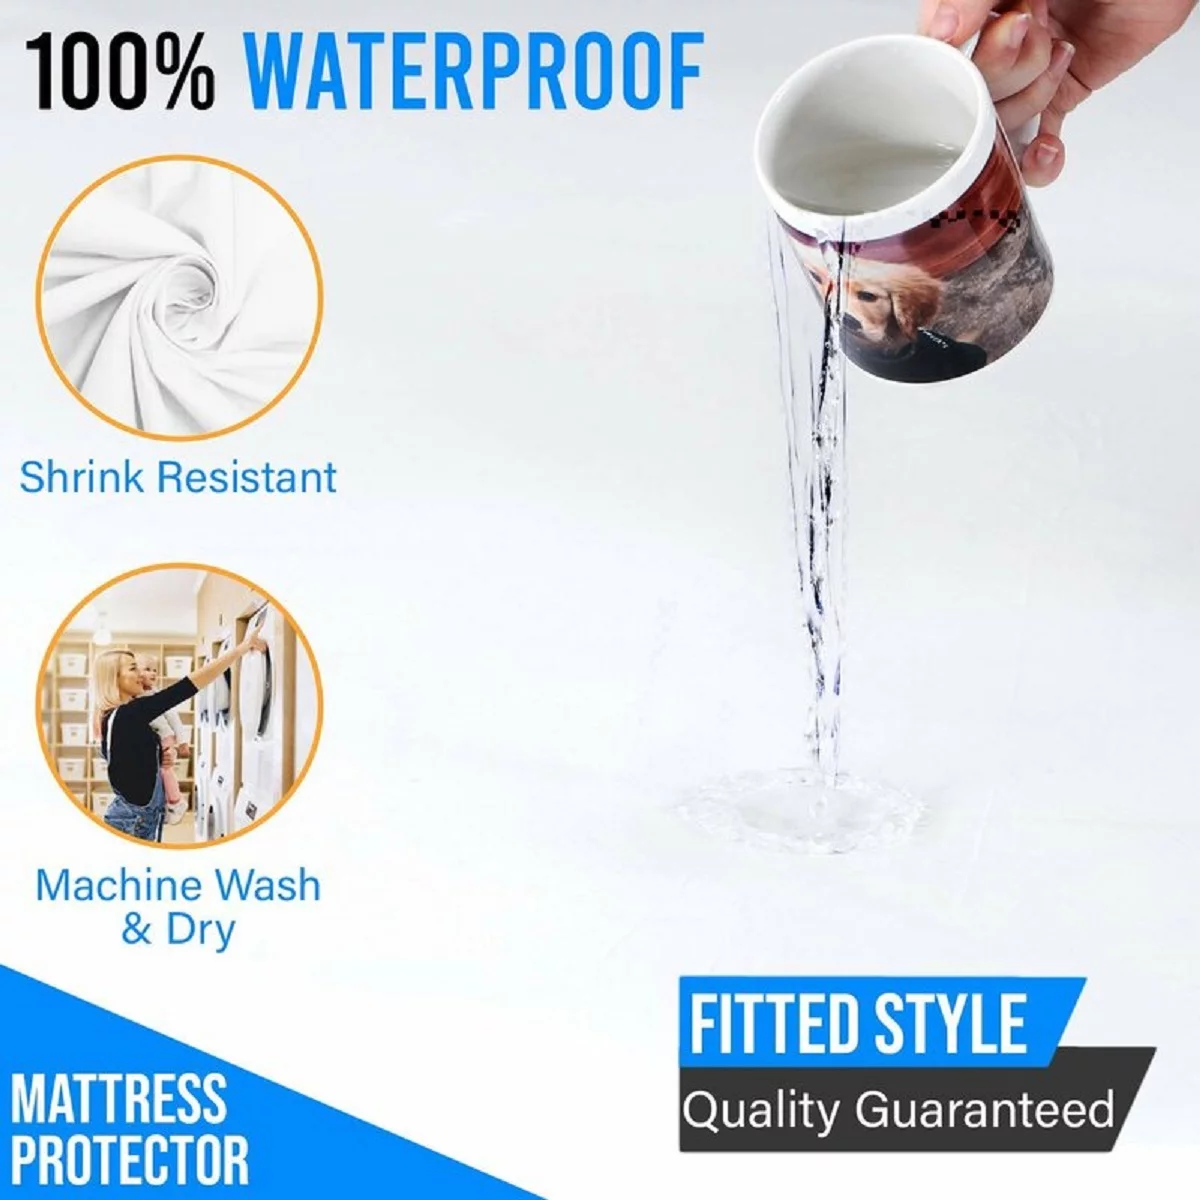 Everyday Waterproof Cotton Mattress Pad Mattress Protector